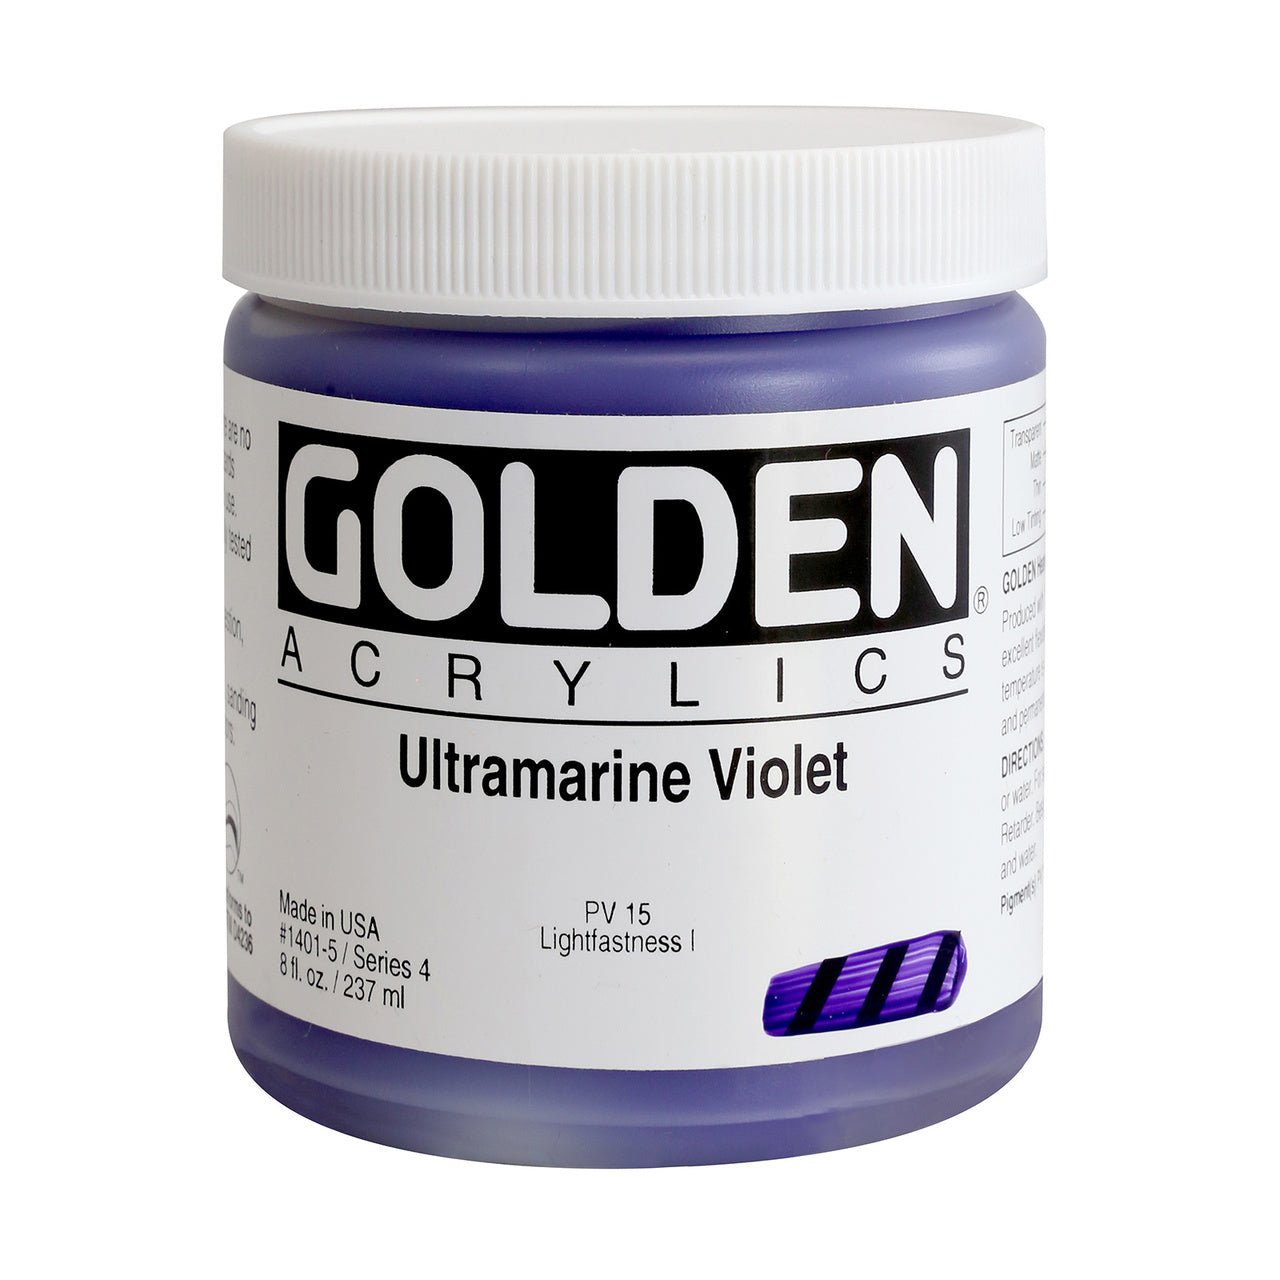 Golden Heavy Body Acrylic Ultramarine Violet 8 oz - merriartist.com